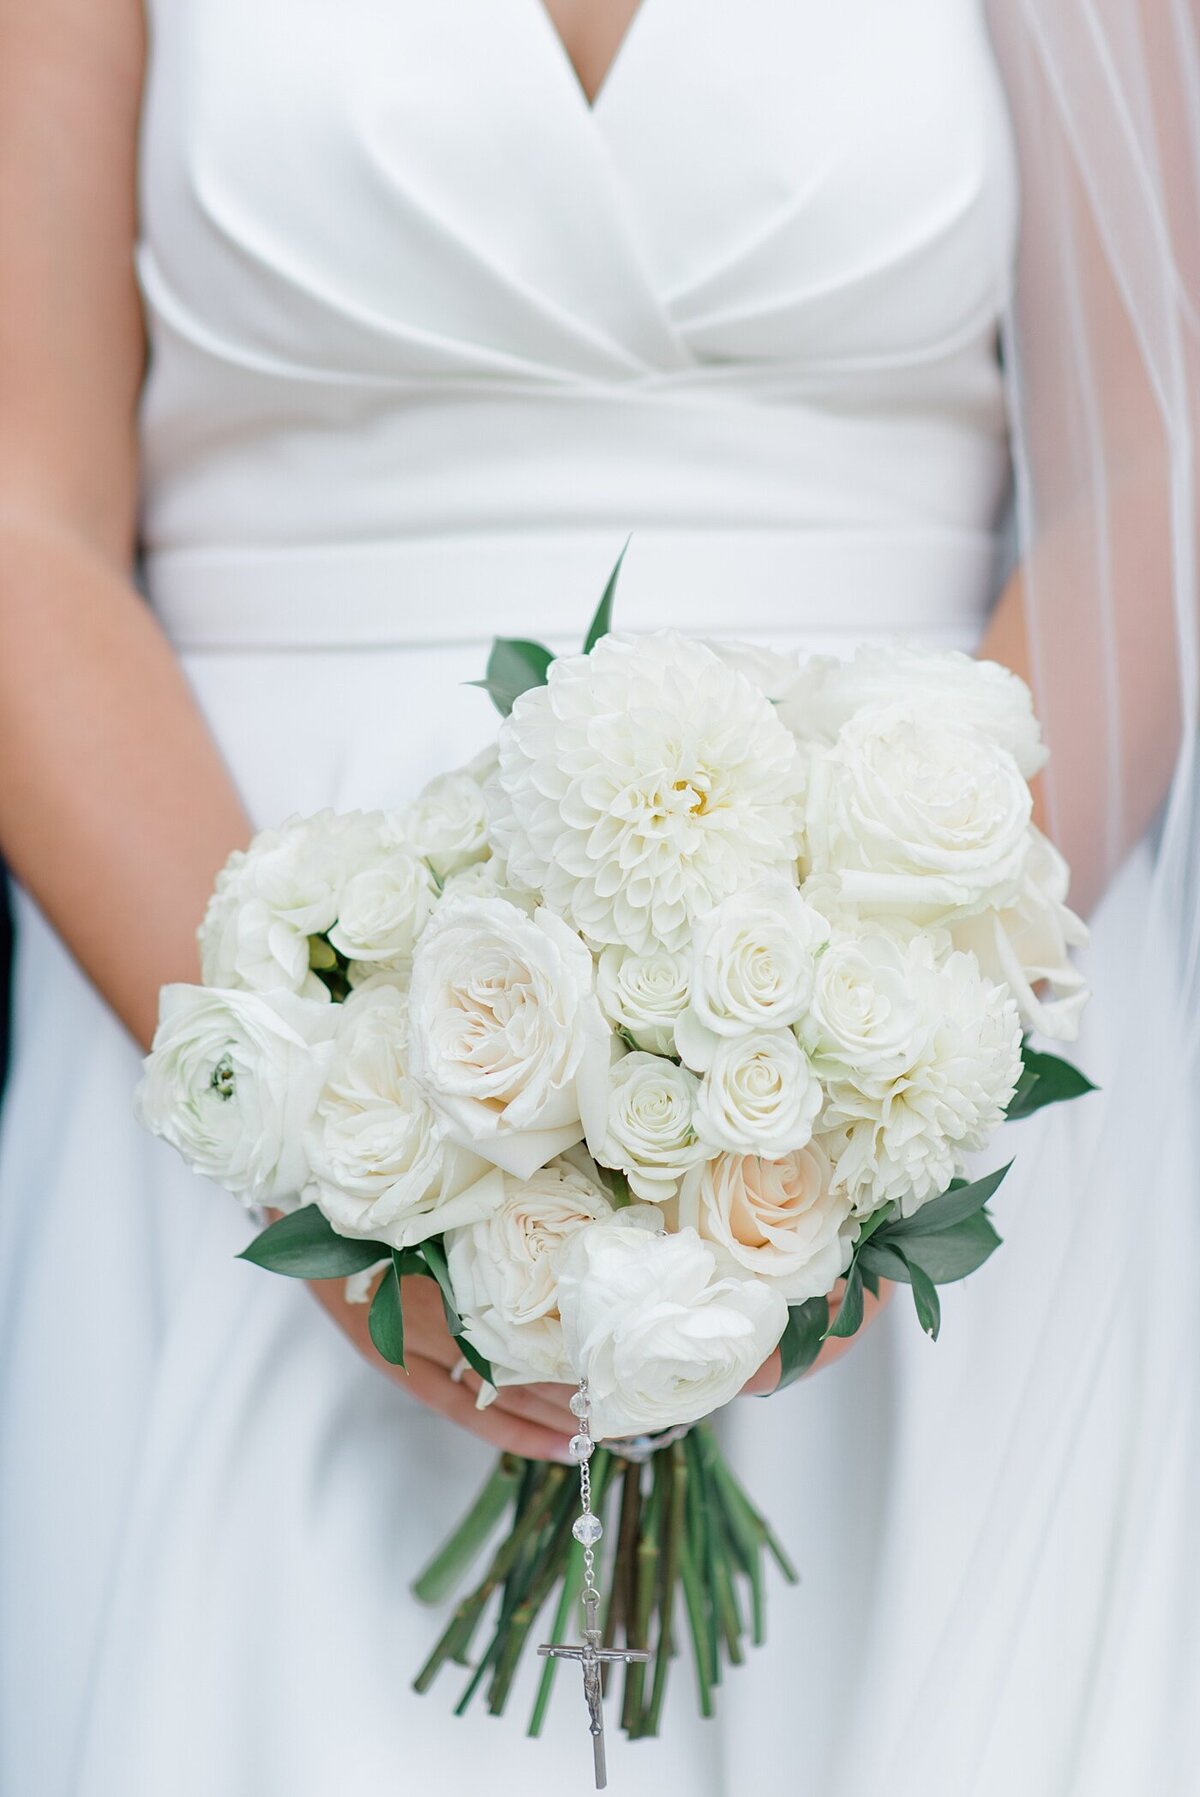 Bridal boutique by Vessel Floral Design in Columbus, Ohio